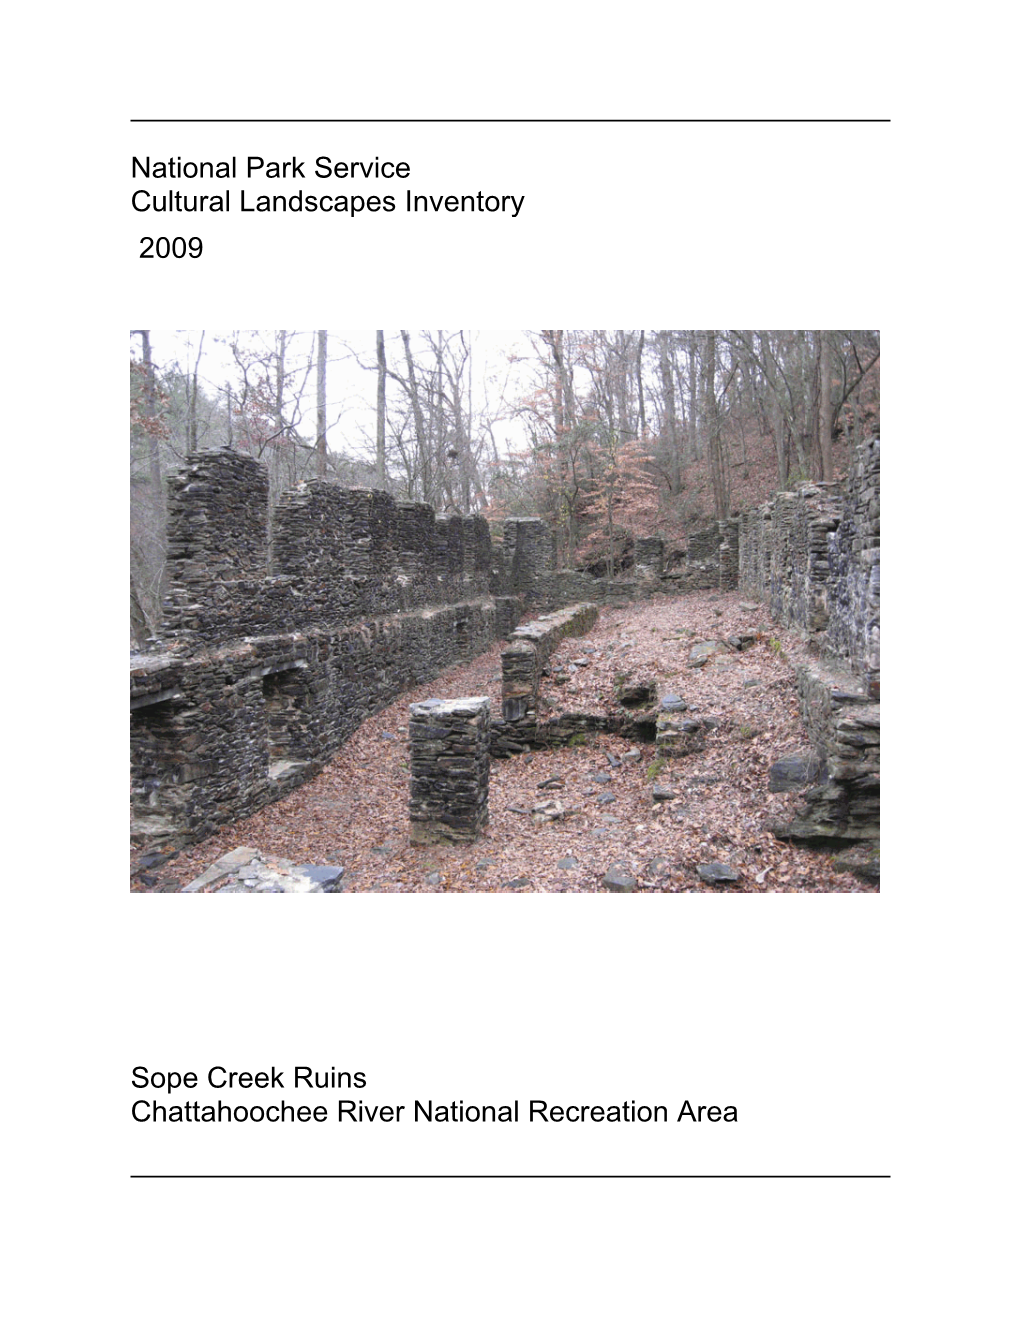 Sope Creek Ruins, Chattahoochee River National Recreation Area